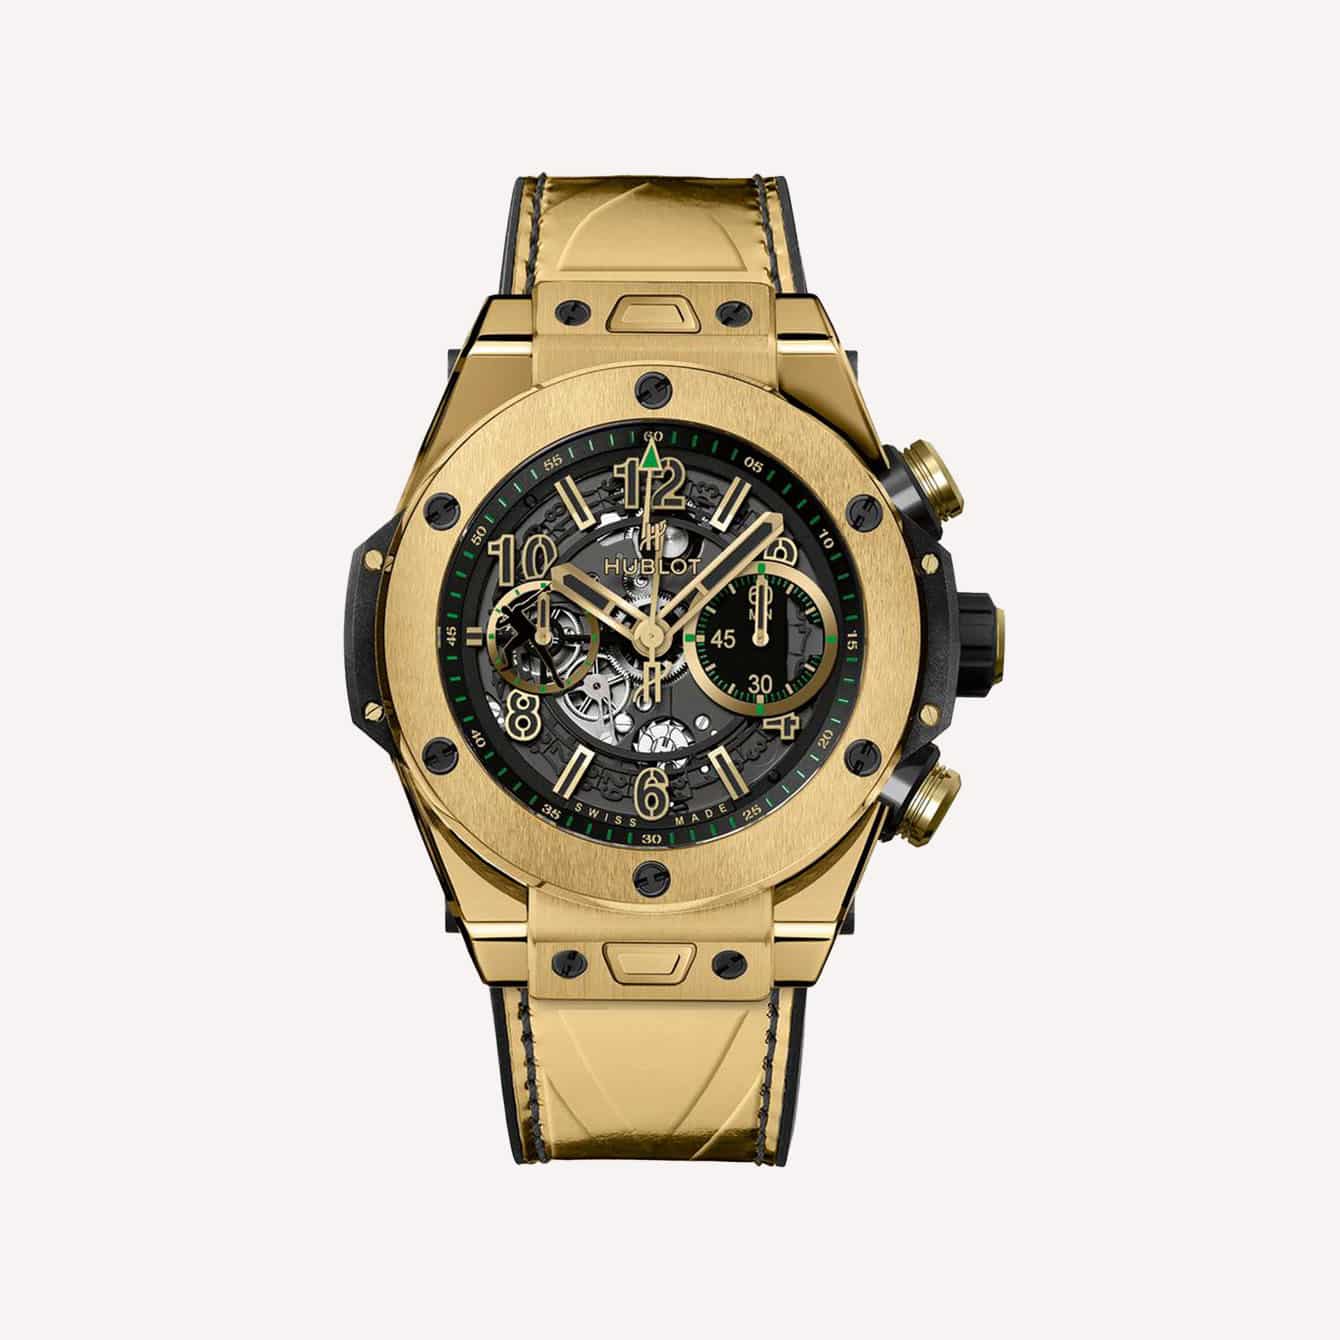 Big-Bang-Unico-Usain-Bolt-yellow-gold-watch